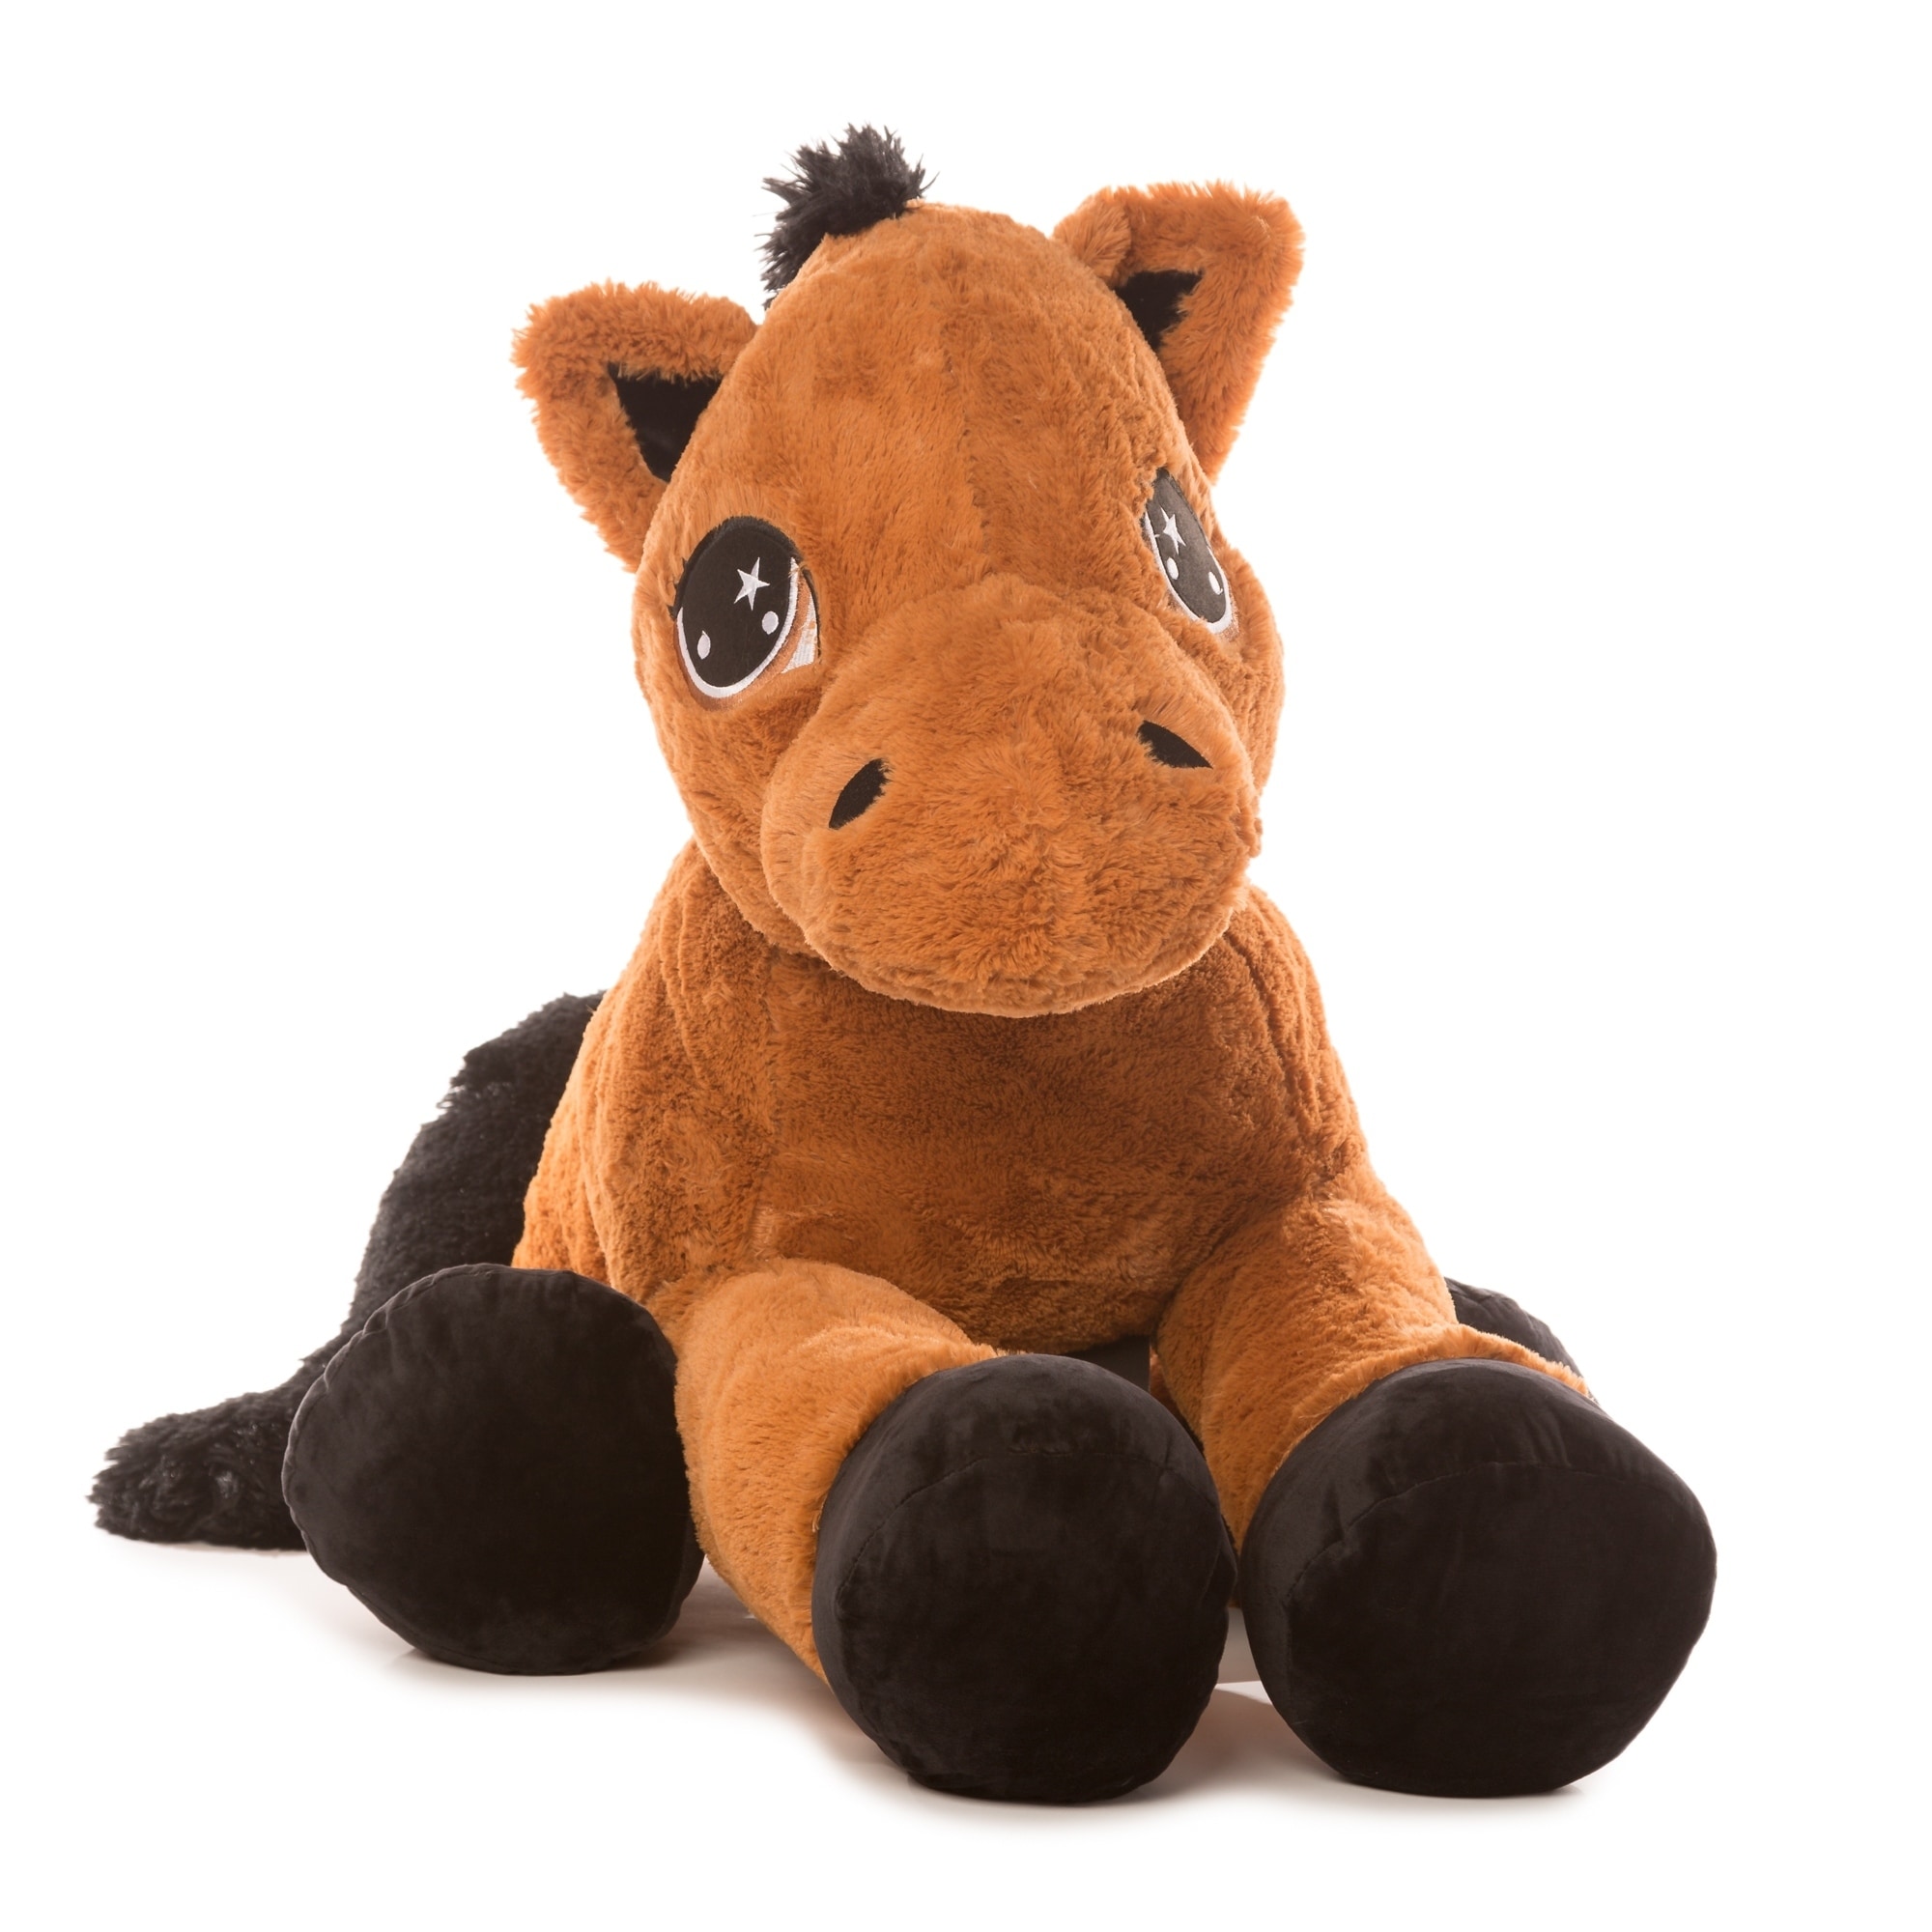 giant horse stuffed animal